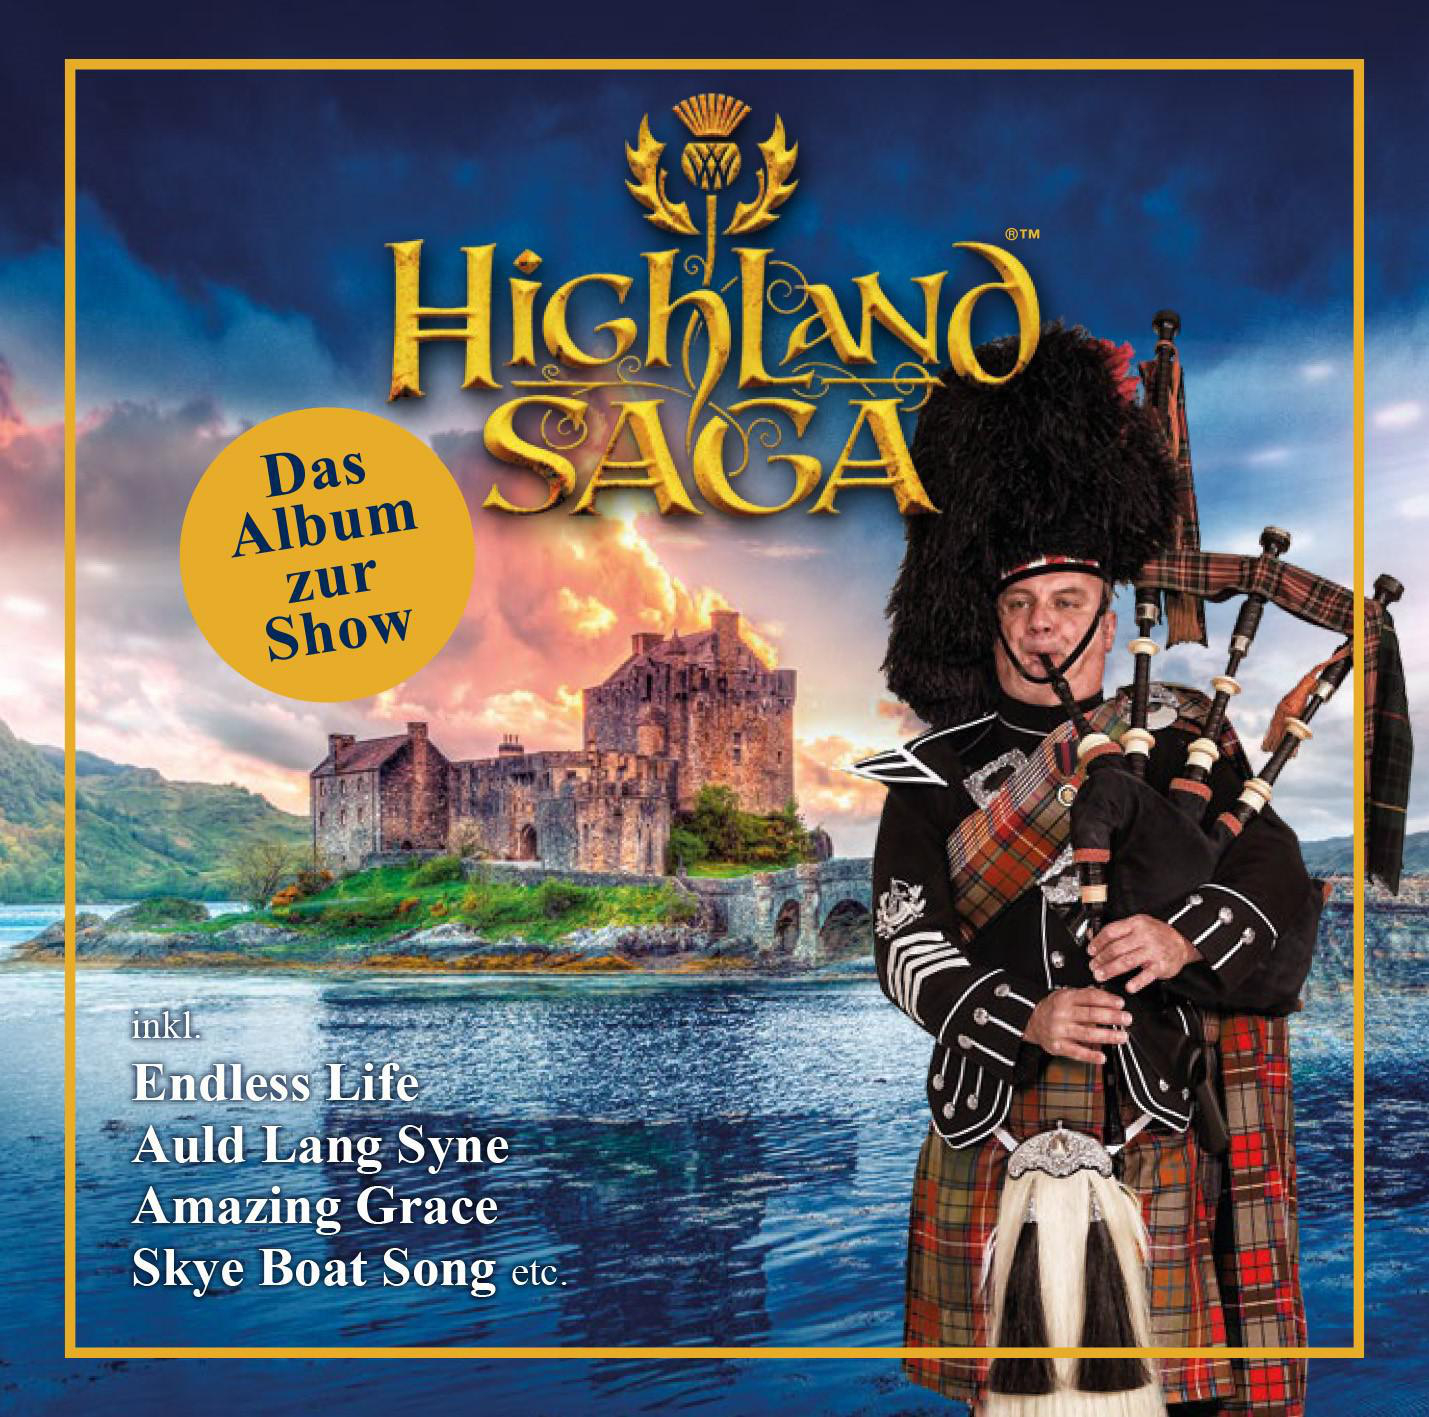 - - Show Saga Das Album - Highland Saga Highland zur (CD)